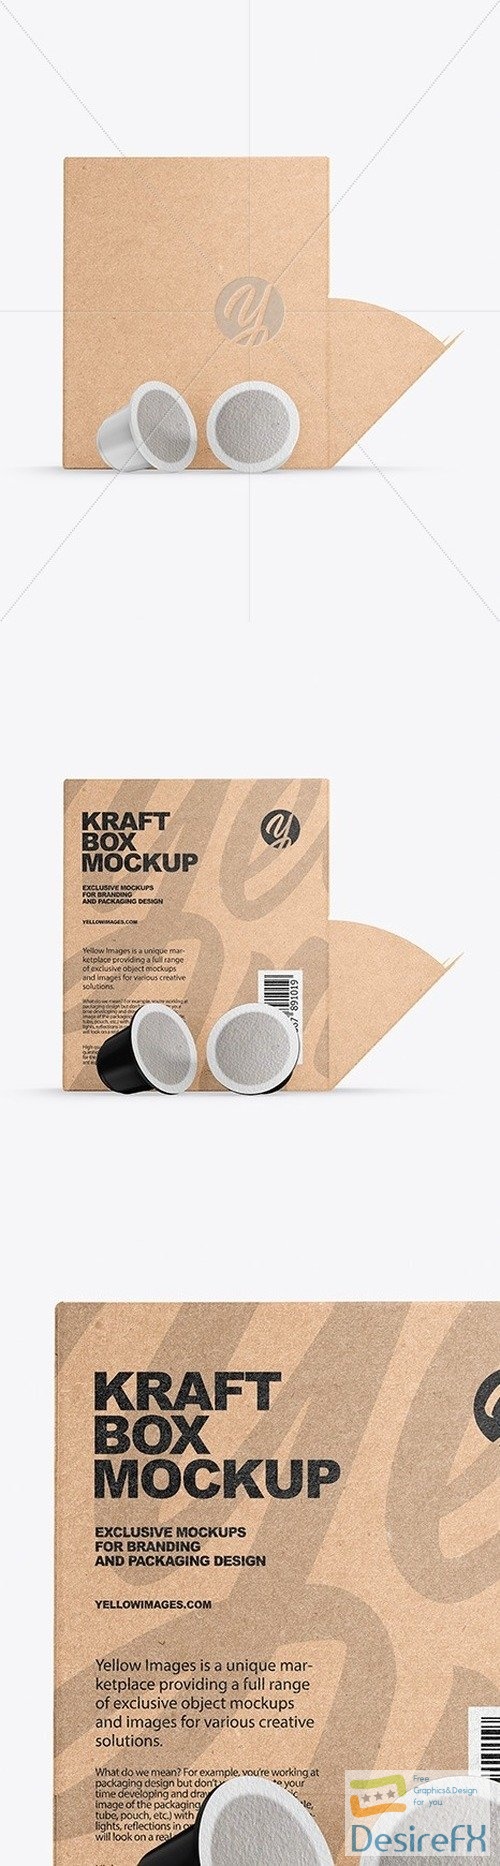 Kraft Box With Coffee Capsules Mockup 58922